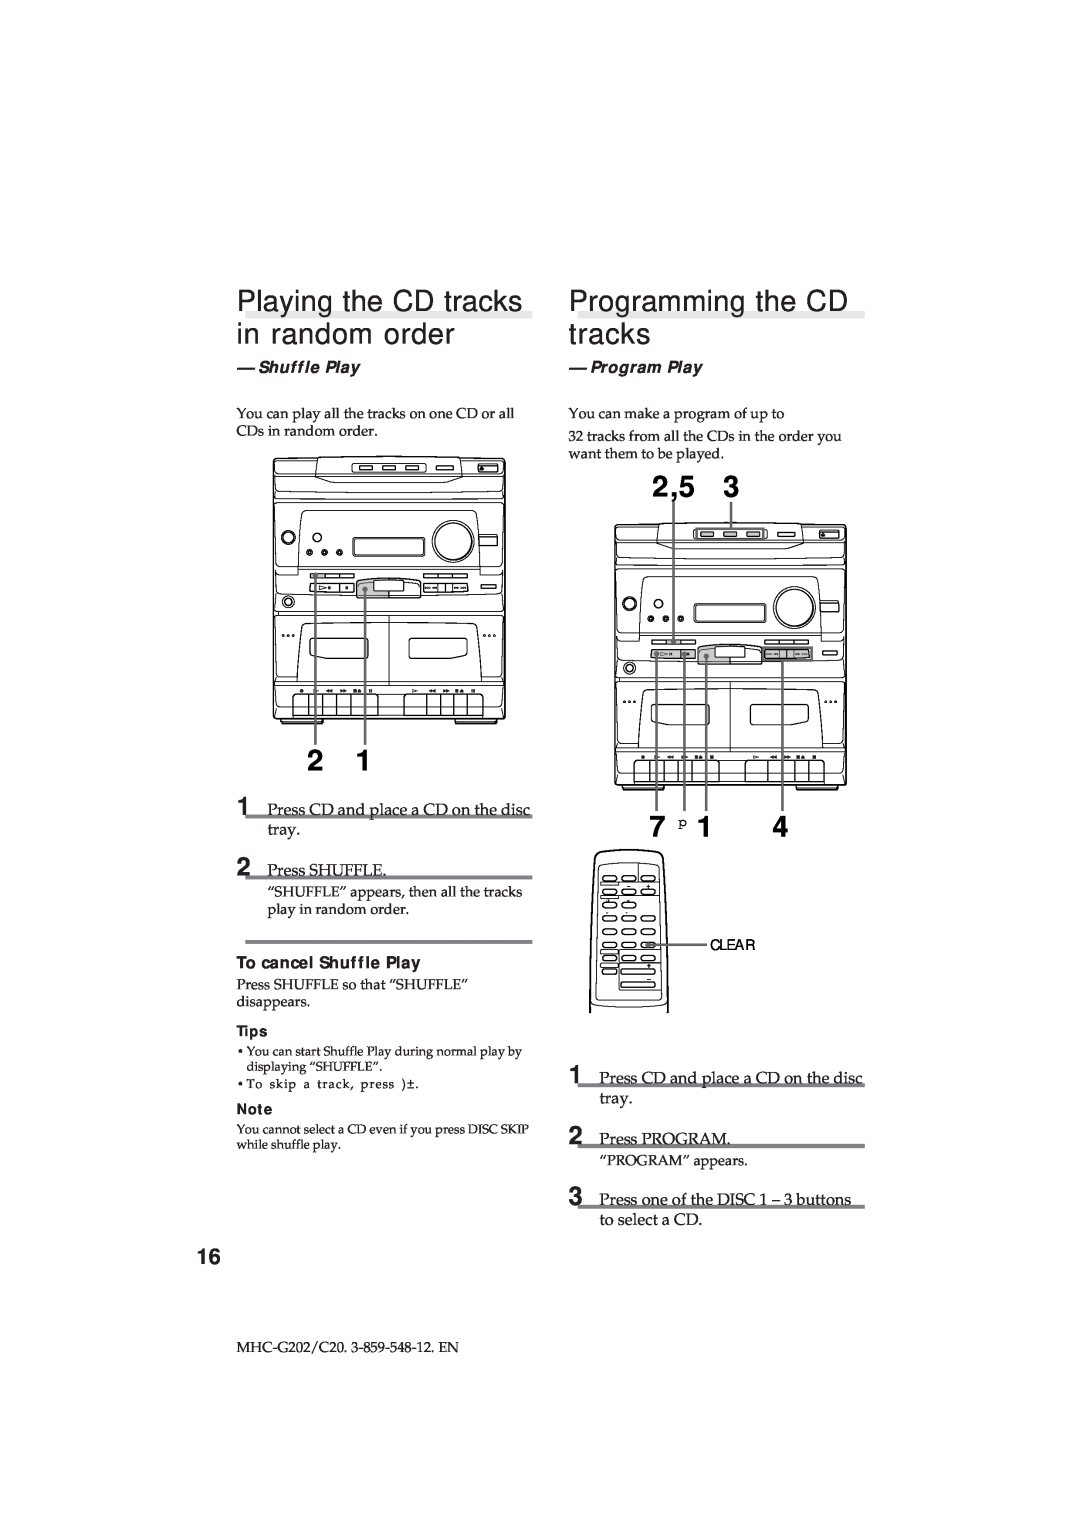 Sony MHC-G202/C20 Playing the CD tracks in random order, Programming the CD tracks, Shuffle Play, Press SHUFFLE, Tips 